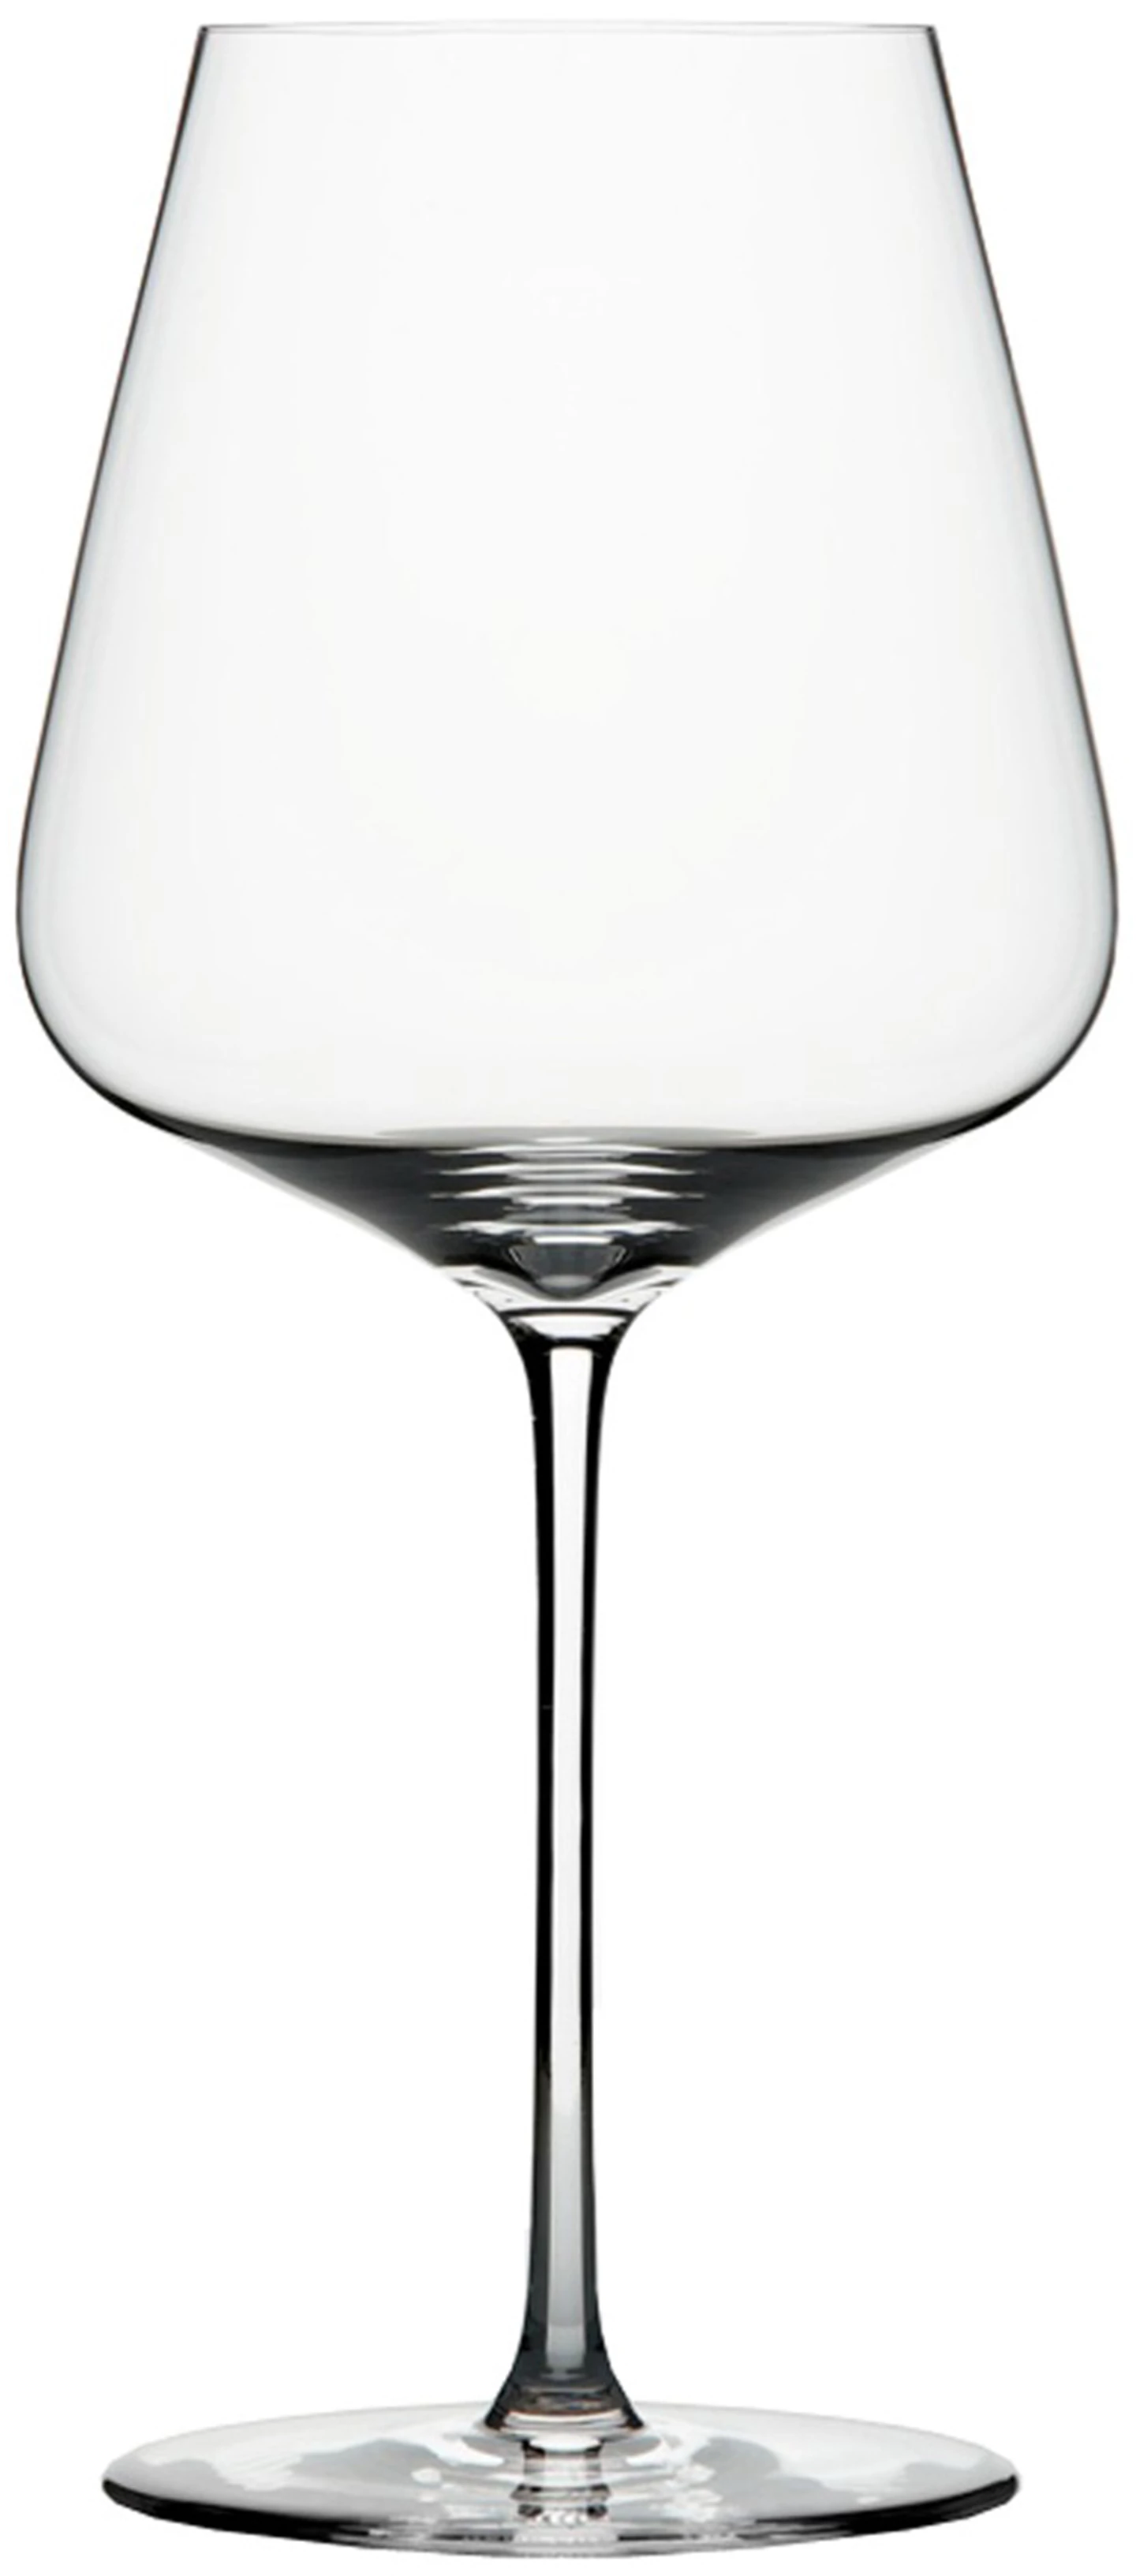 Løgismose Grej Zalto Glasperfektion Bordeauxglas 6 stk - 133390